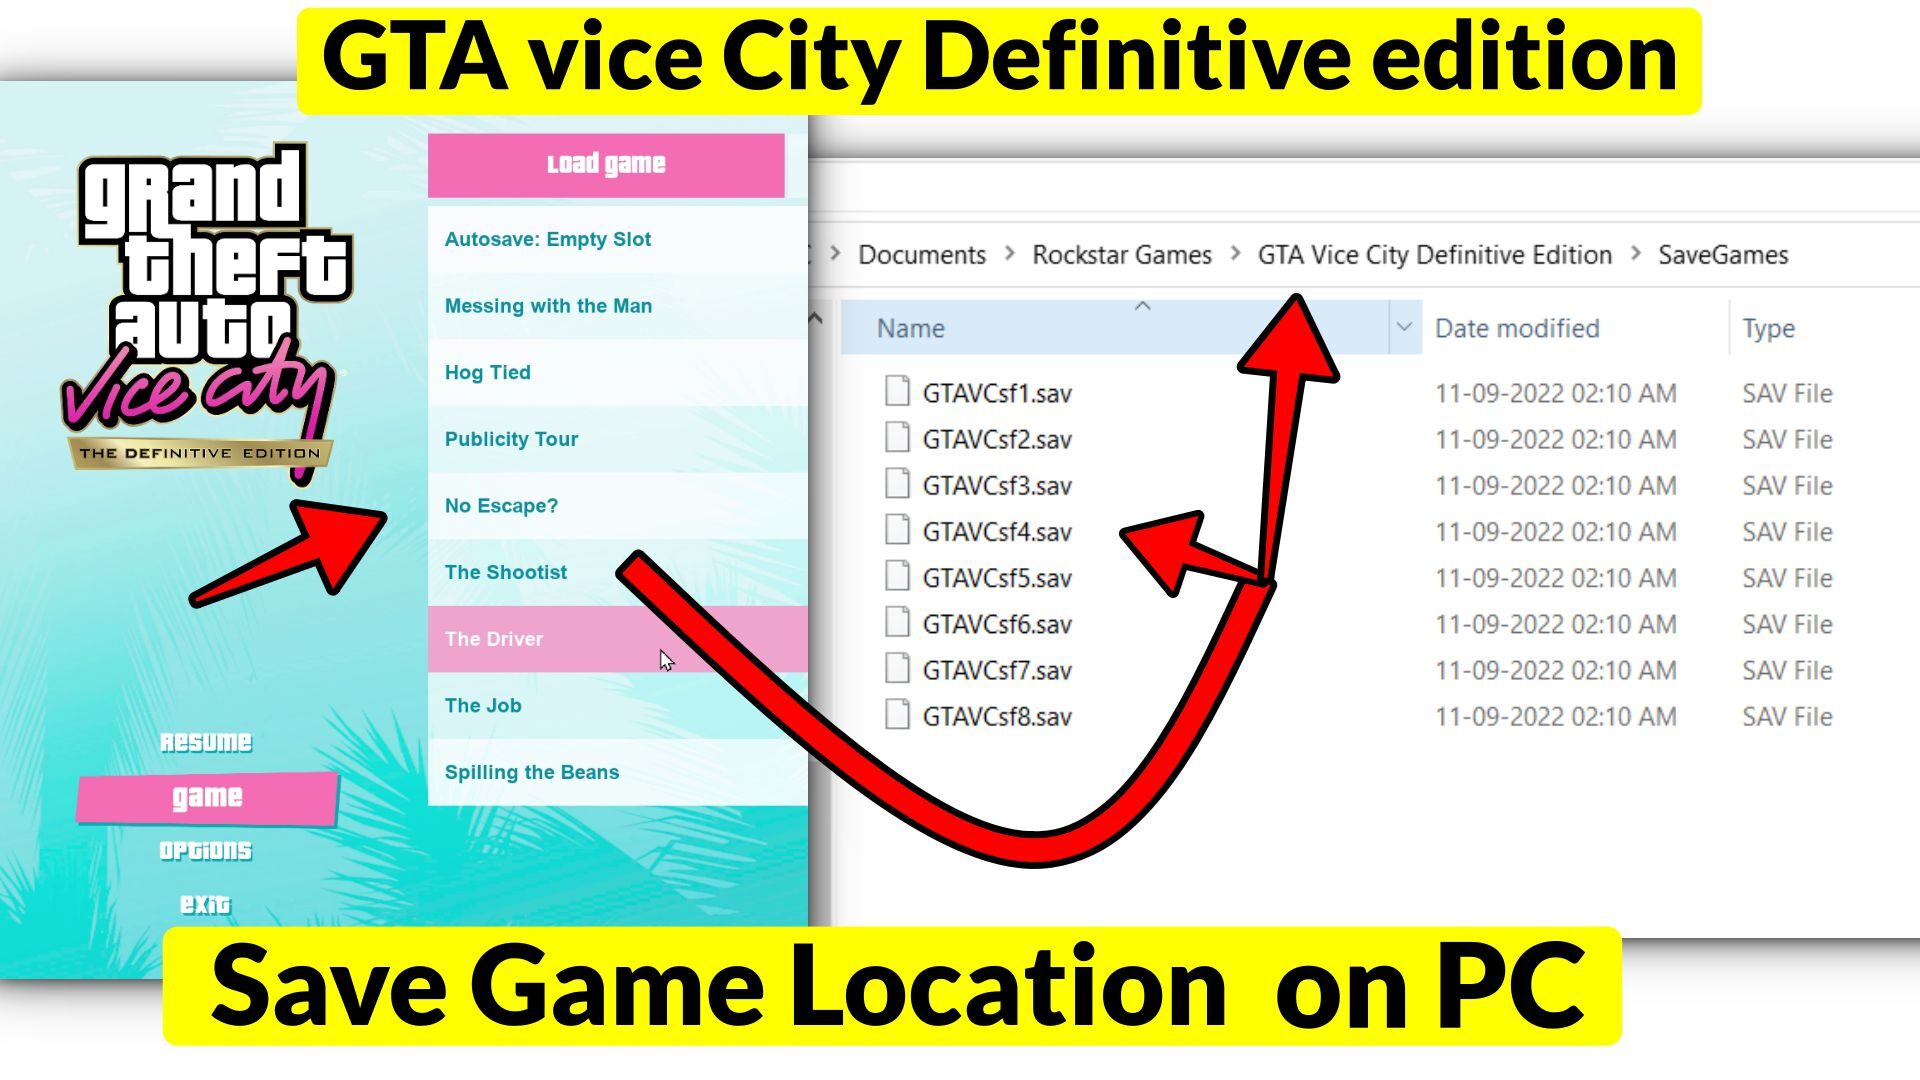 GTA vice city Definitive edition Save Game Location on Windows PC